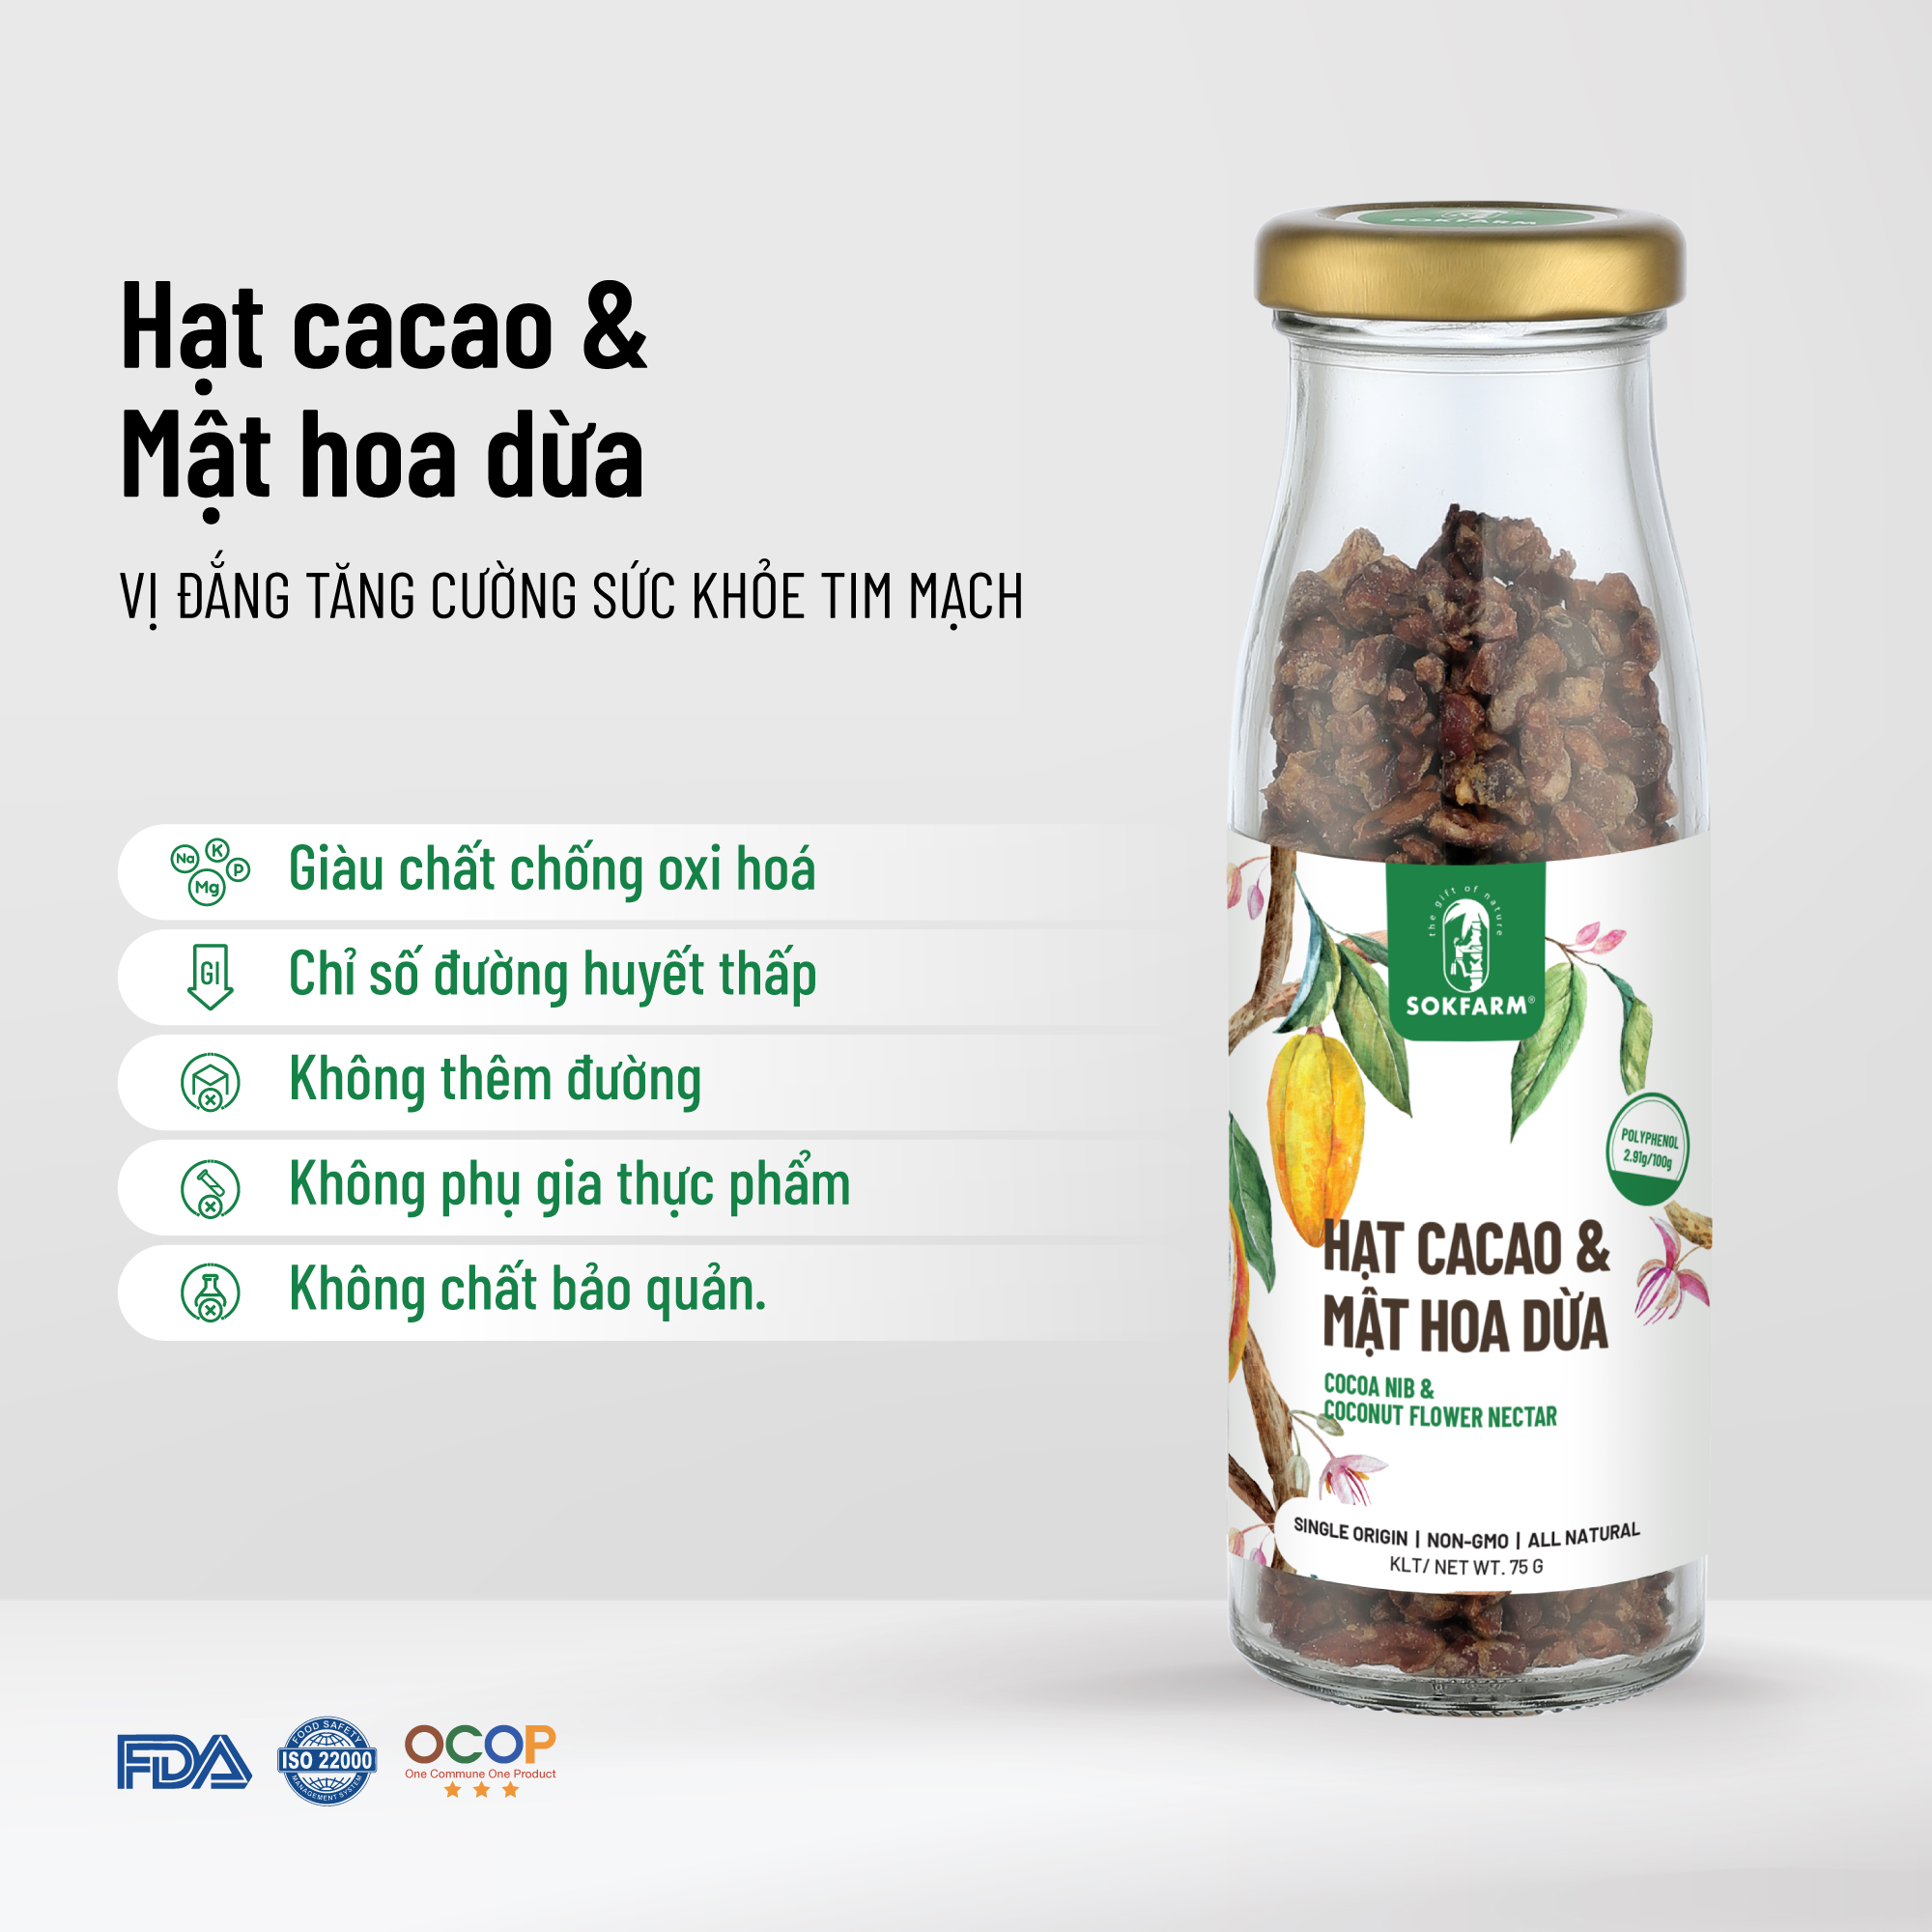 https://sokfarm-s3.s3.ap-southeast-1.amazonaws.com/Trang%20chi%20ti%E1%BA%BFt/Cacao/Cacao-4.jpg